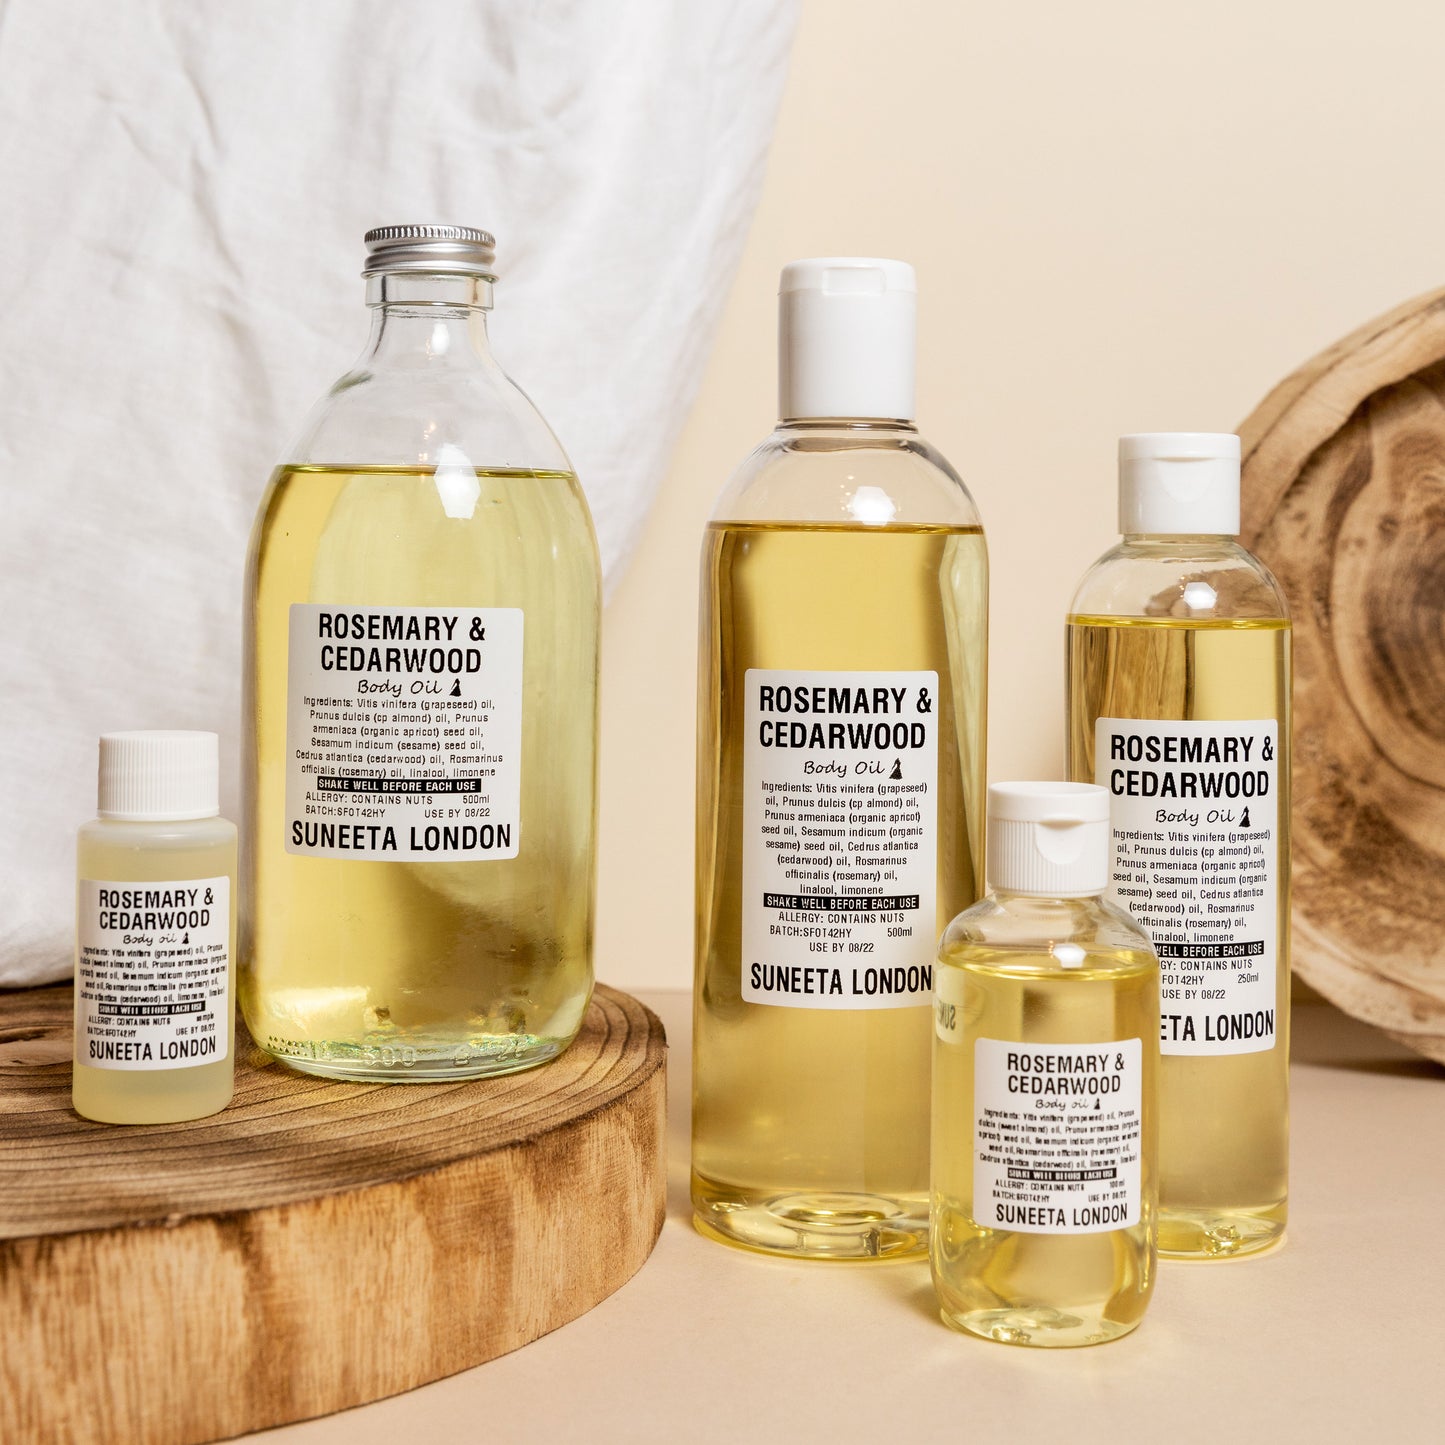 Rosemary & Cedarwood Body Oil